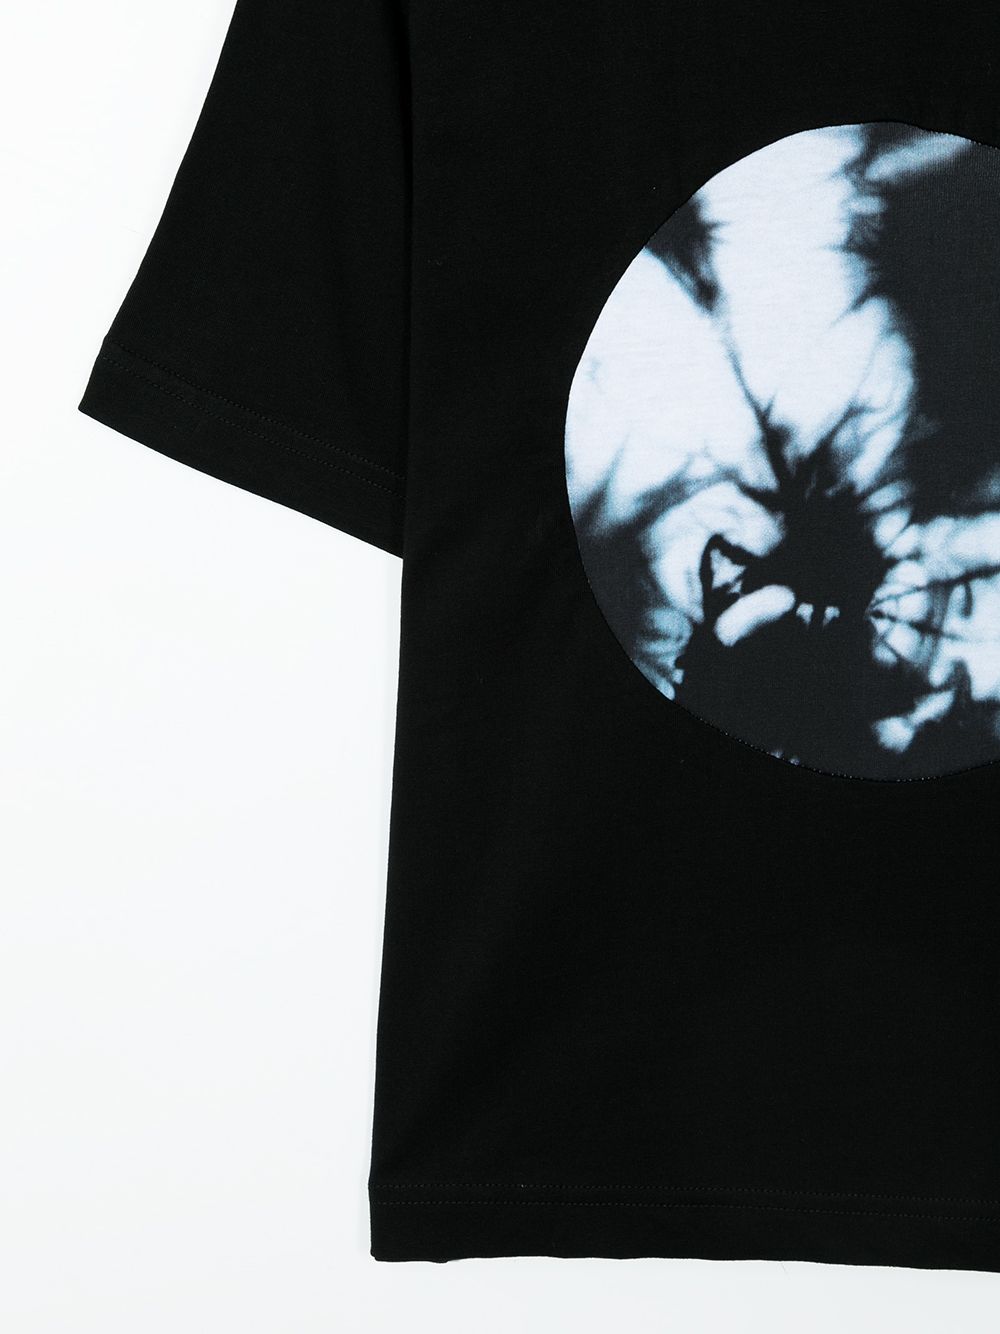 DIESEL KIDS Tie Dye Circle T-Shirt Black - MAISONDEFASHION.COM